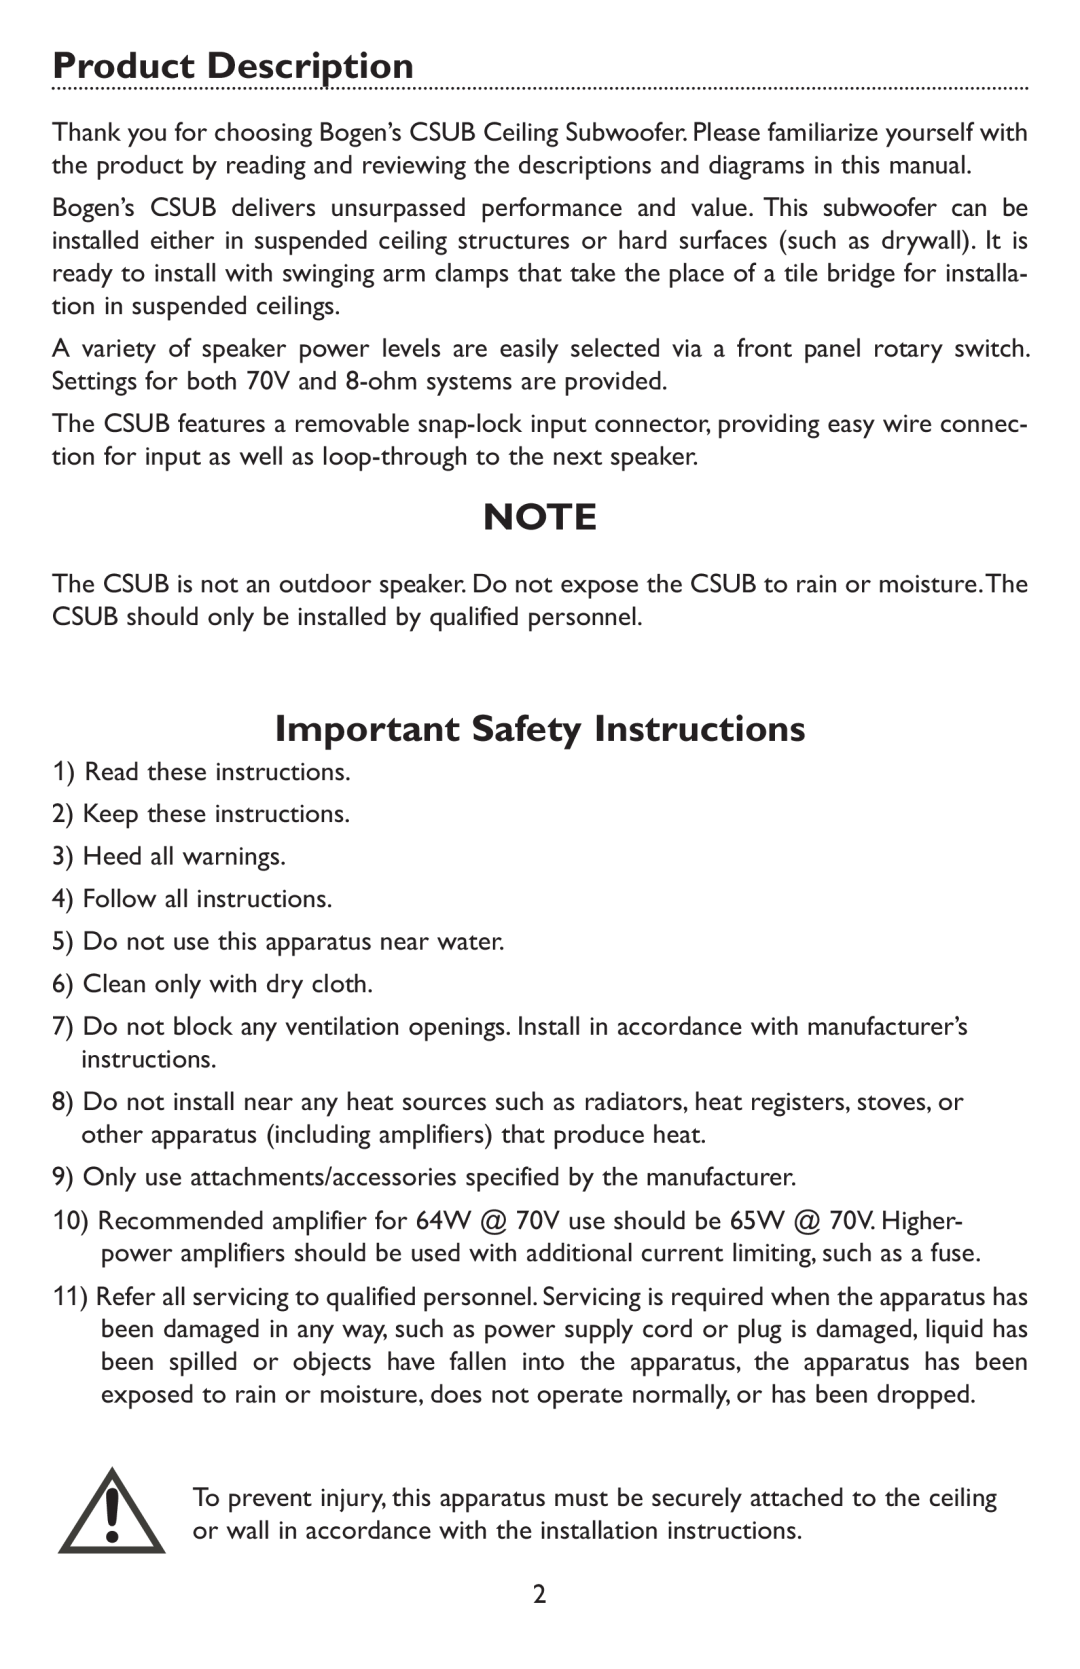 Bogen CSUB specifications Product Description, Important Safety Instructions 